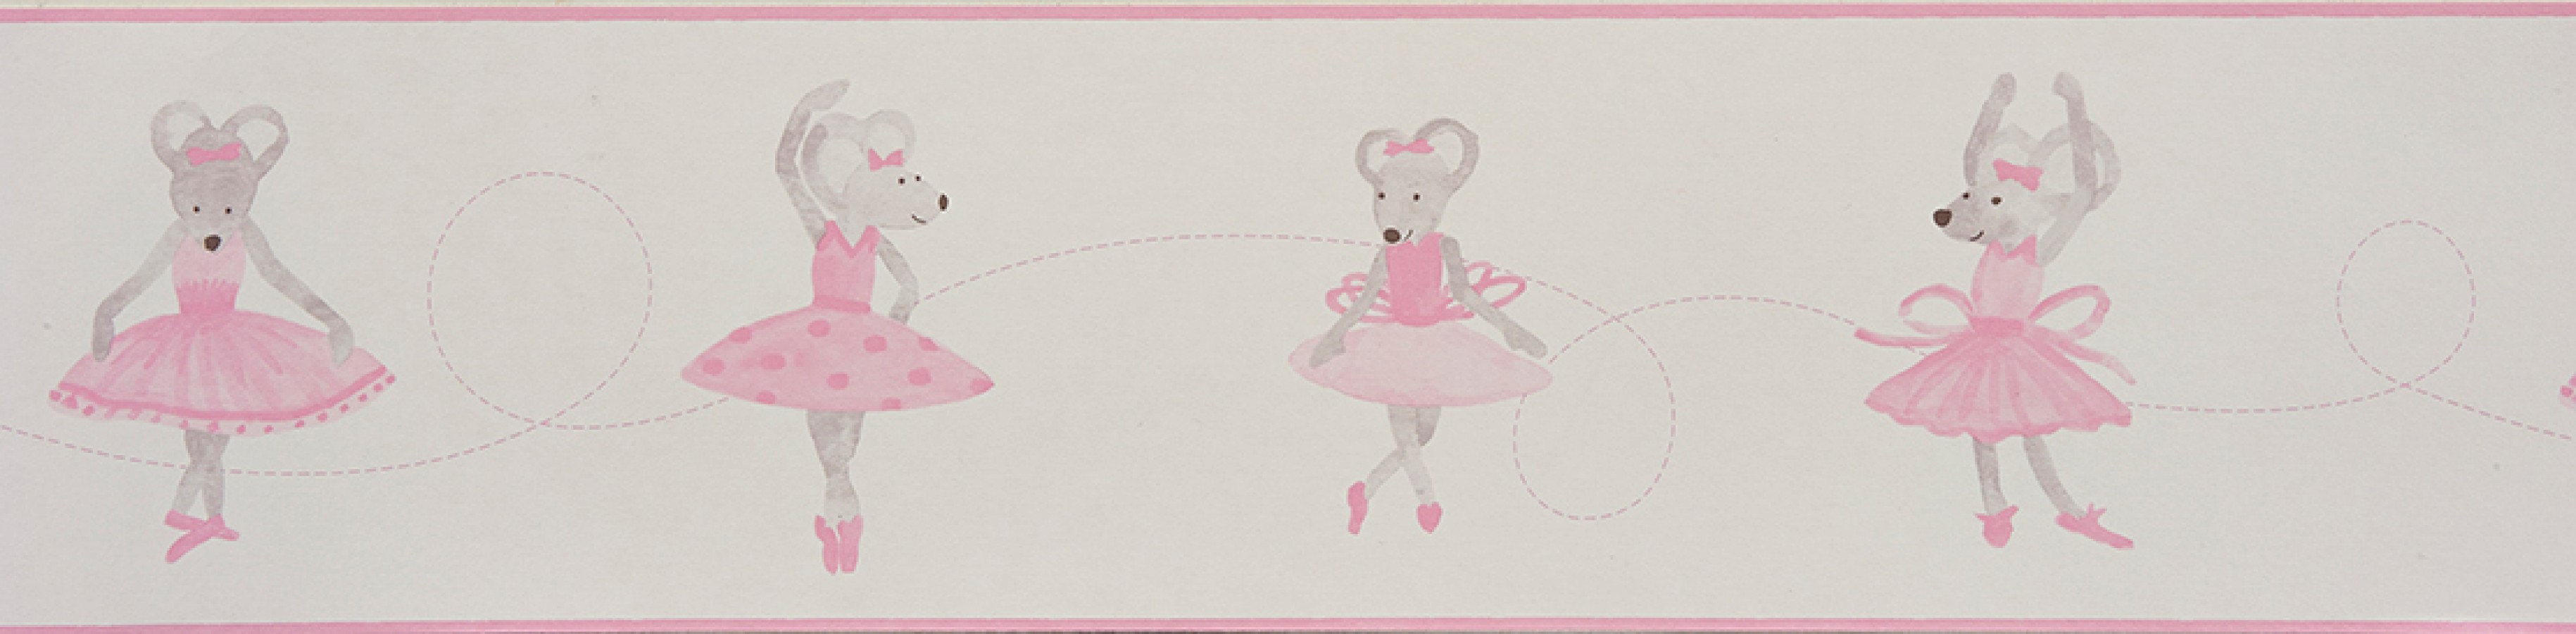 Cenefa ratitas bailarinas infantiles rosa claro Dancer Mousy 229292